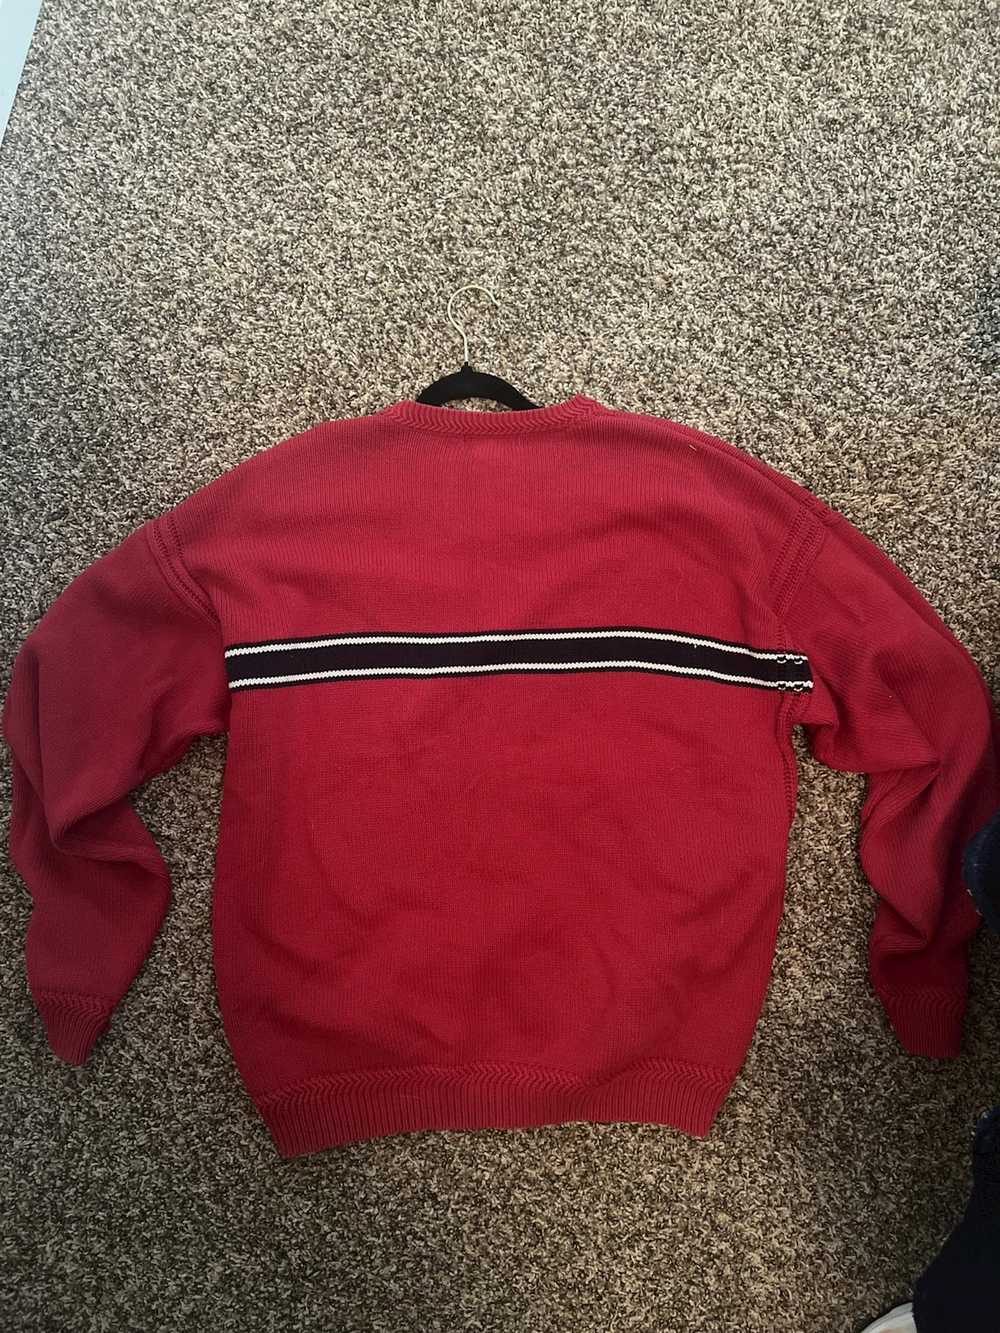 Nautica Red stripped nautica sweater - image 1